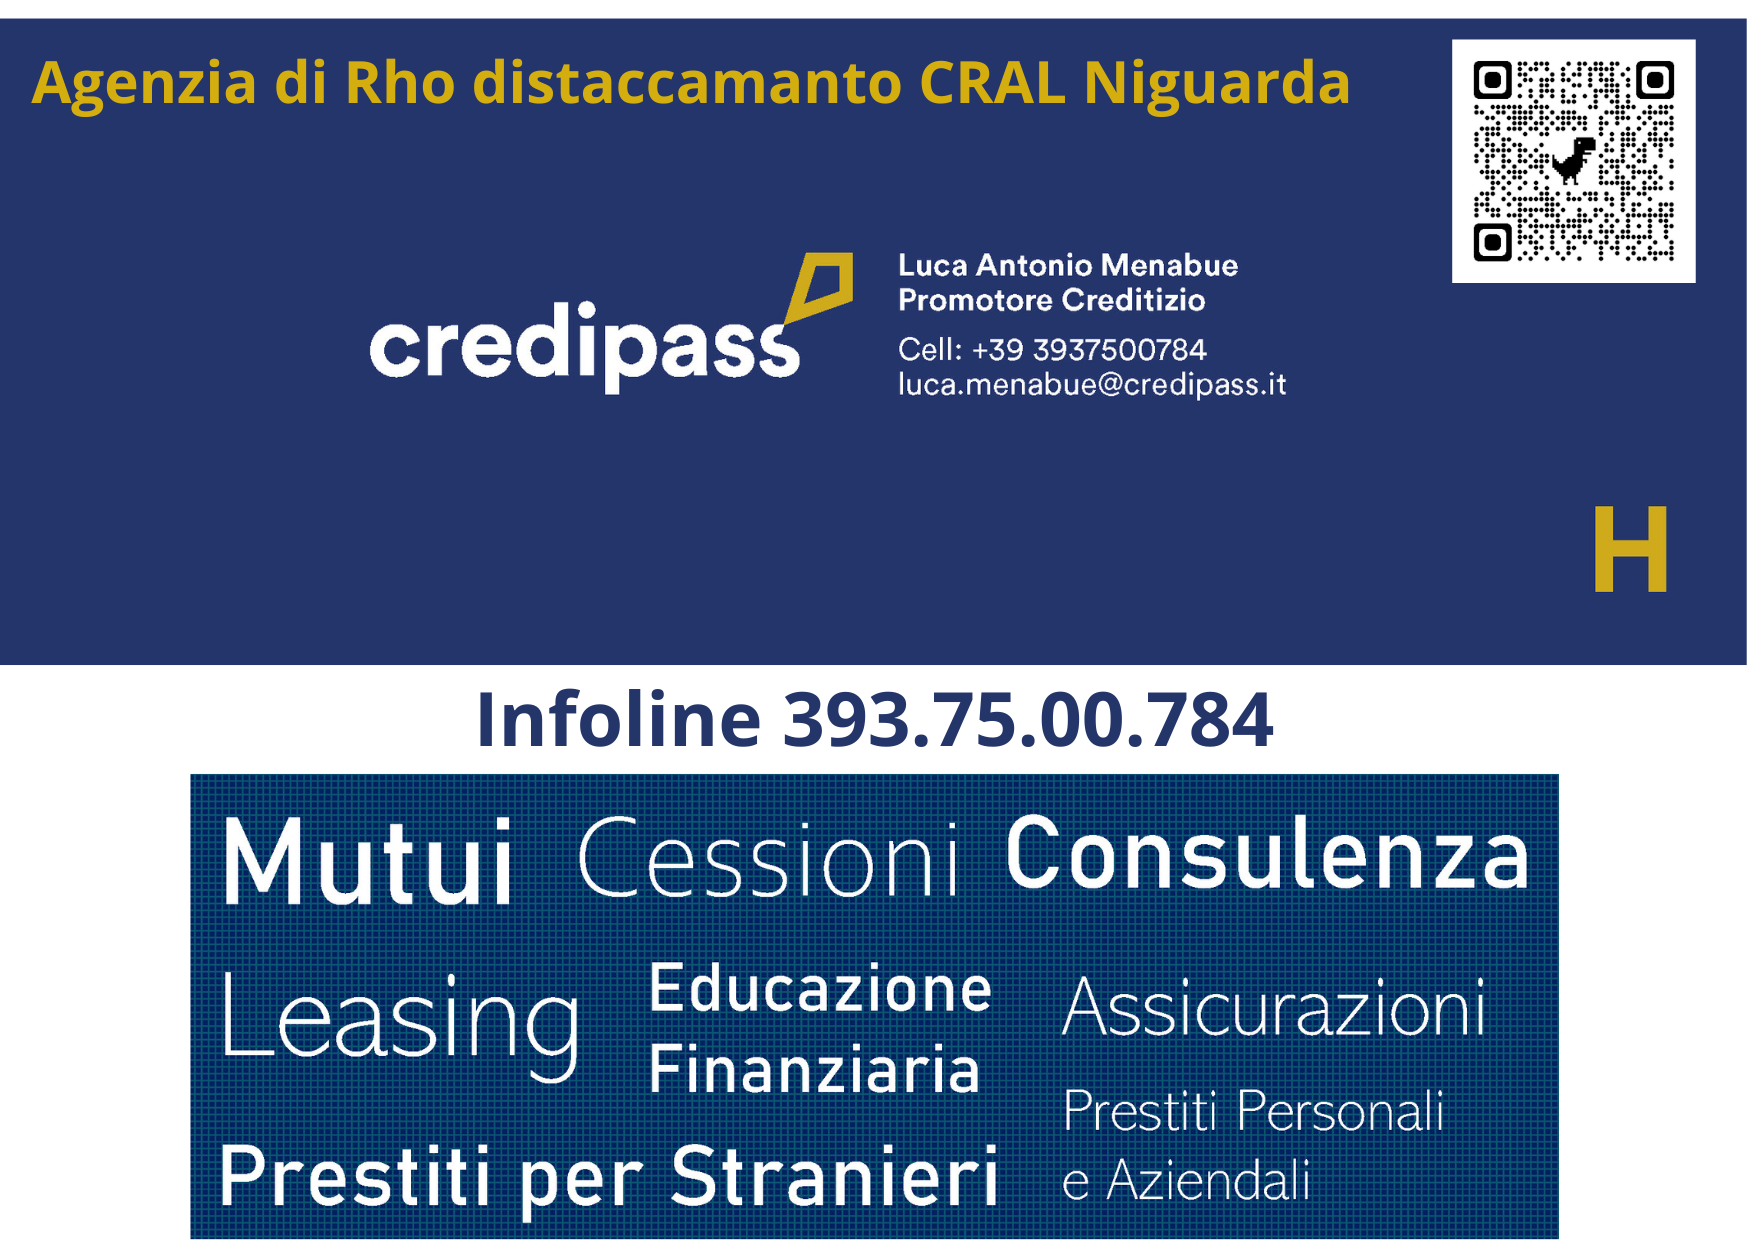 Agenzia di Rho distaccamanto CRAL Niguarda (1).png